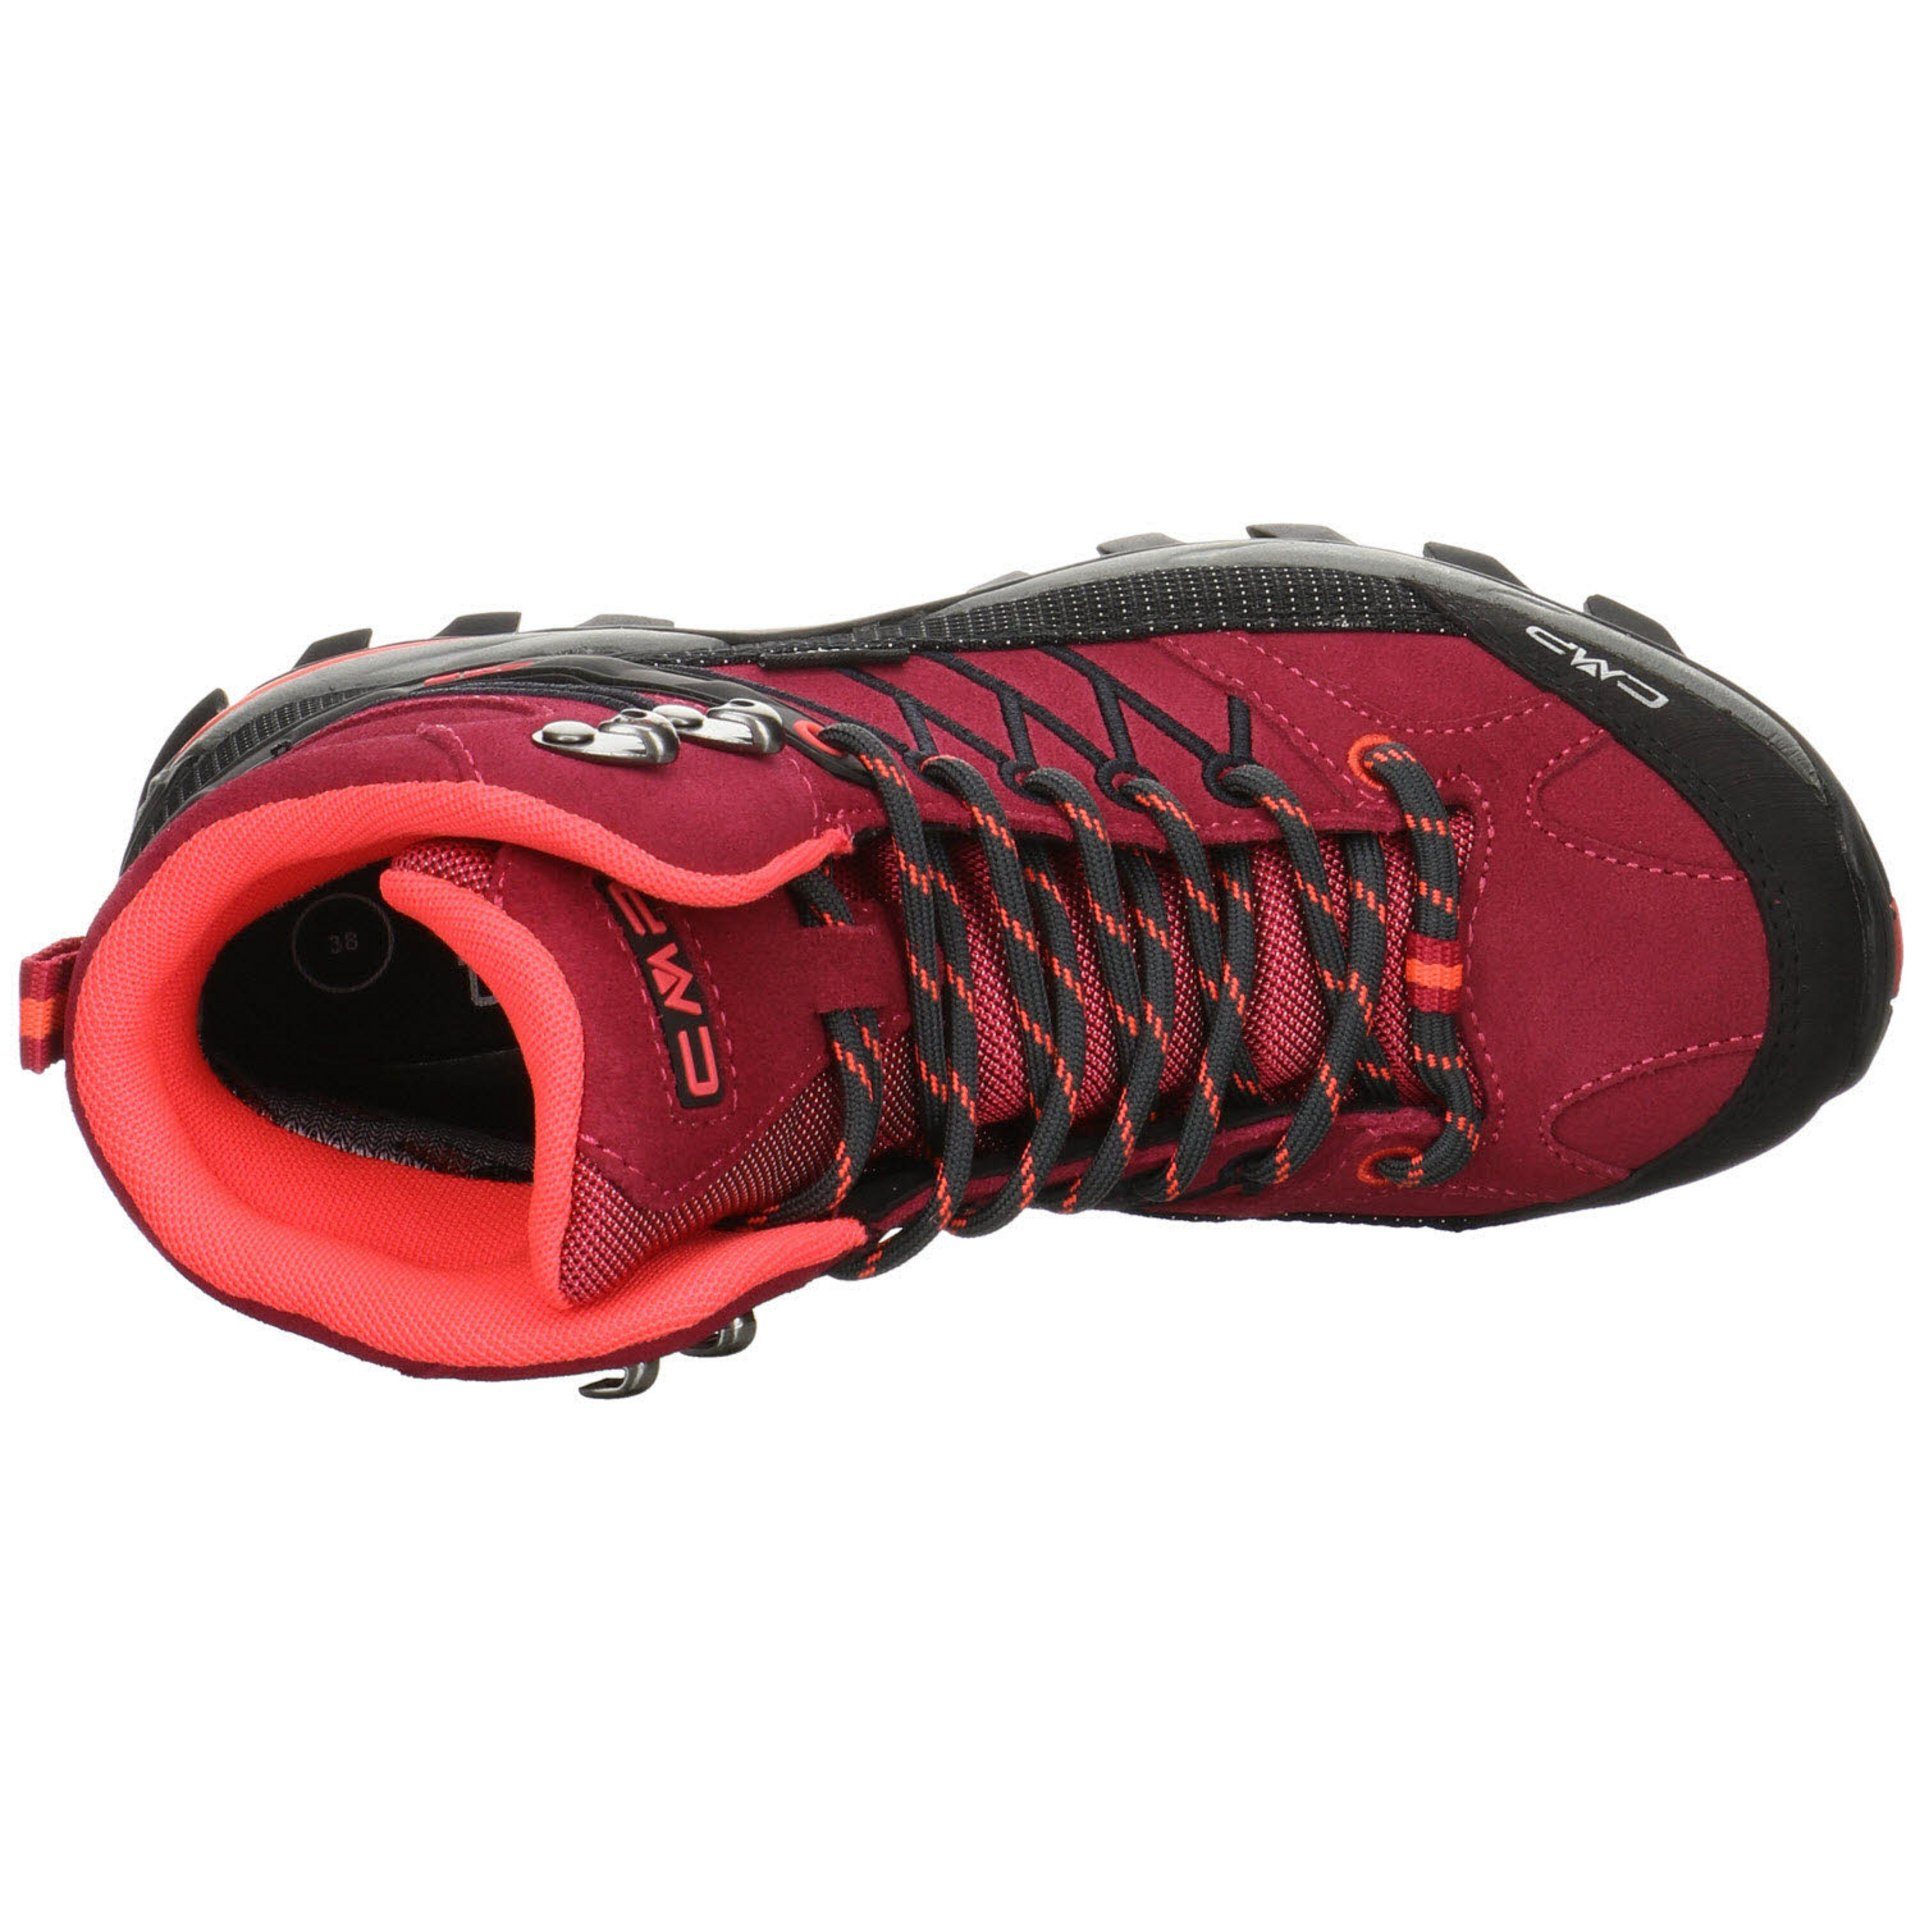 CMP Damen Mid Schuhe Outdoorschuh Outdoorschuh Outdoor Leder-/Textilkombination MAGENTA-ANTRACITE Rigel